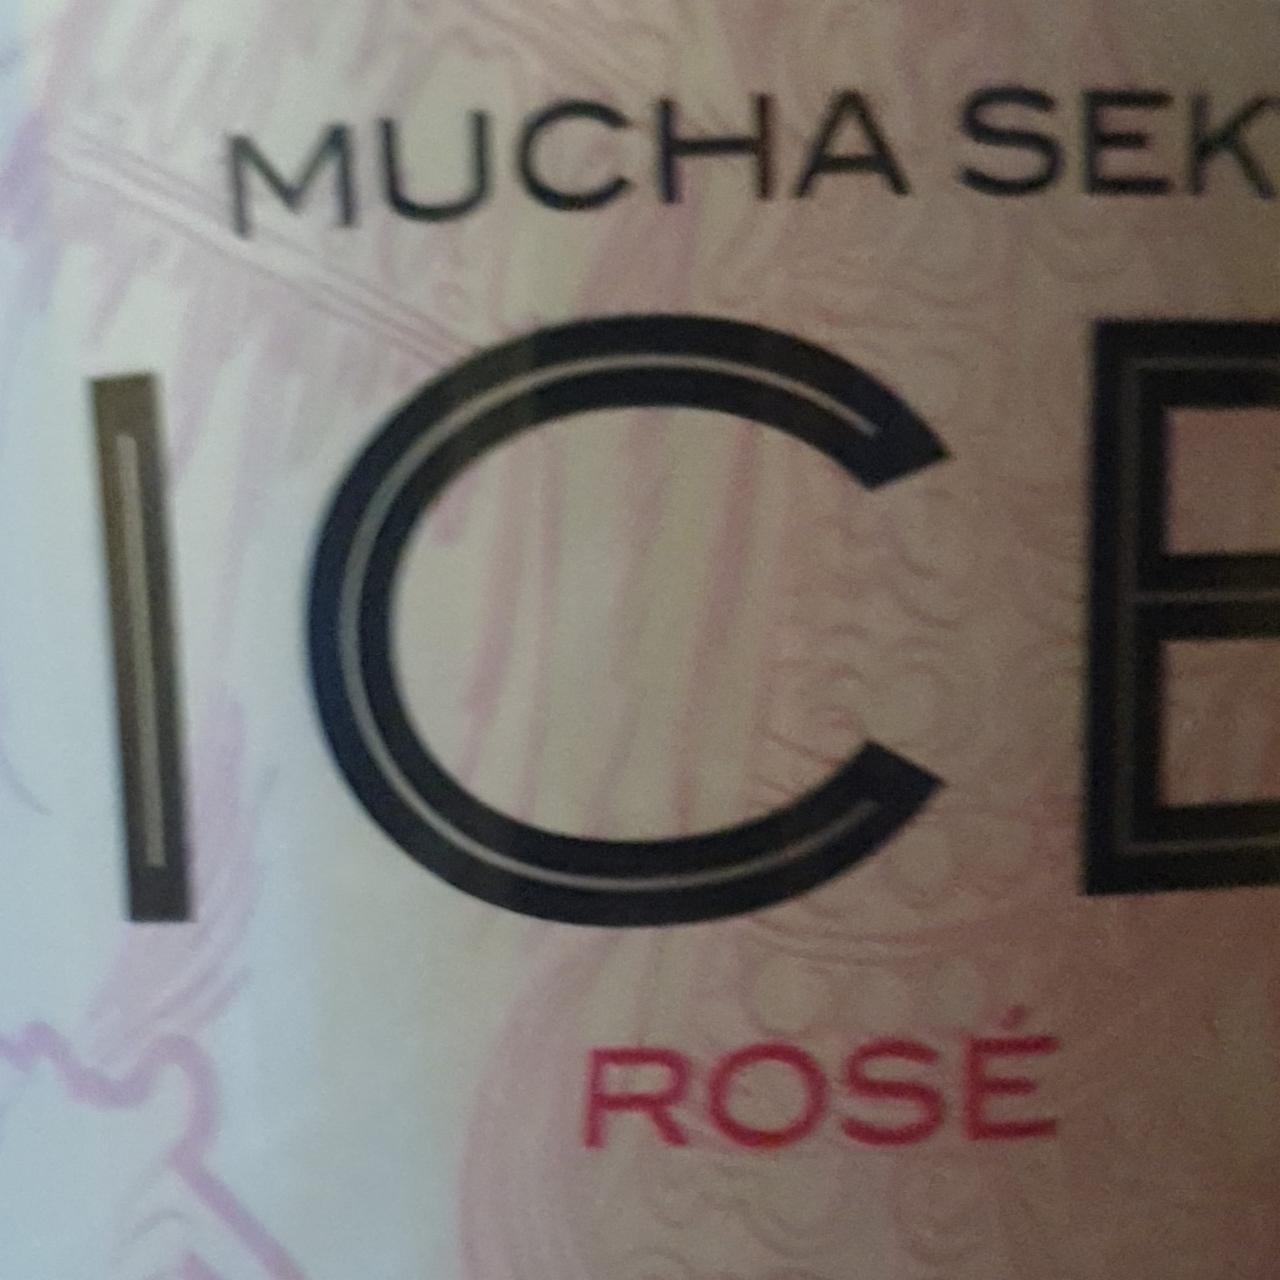 Fotografie - Mucha Sect ICE Rosé